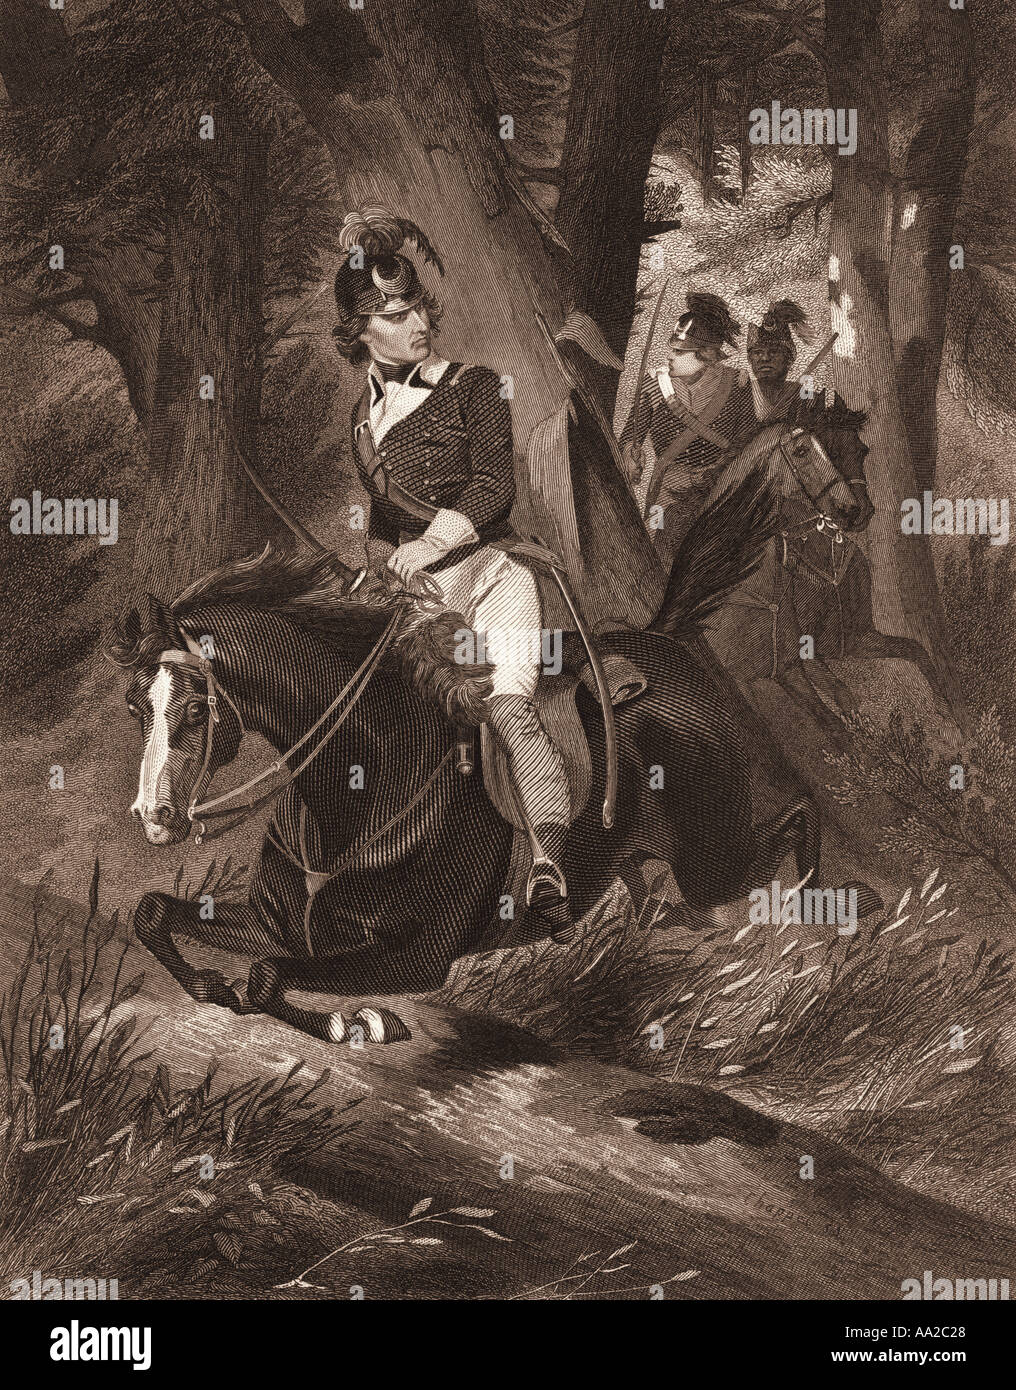 Francis Marion, 'Swamp Fox,' on horseback during the American Revolutionary War. Stock Photo